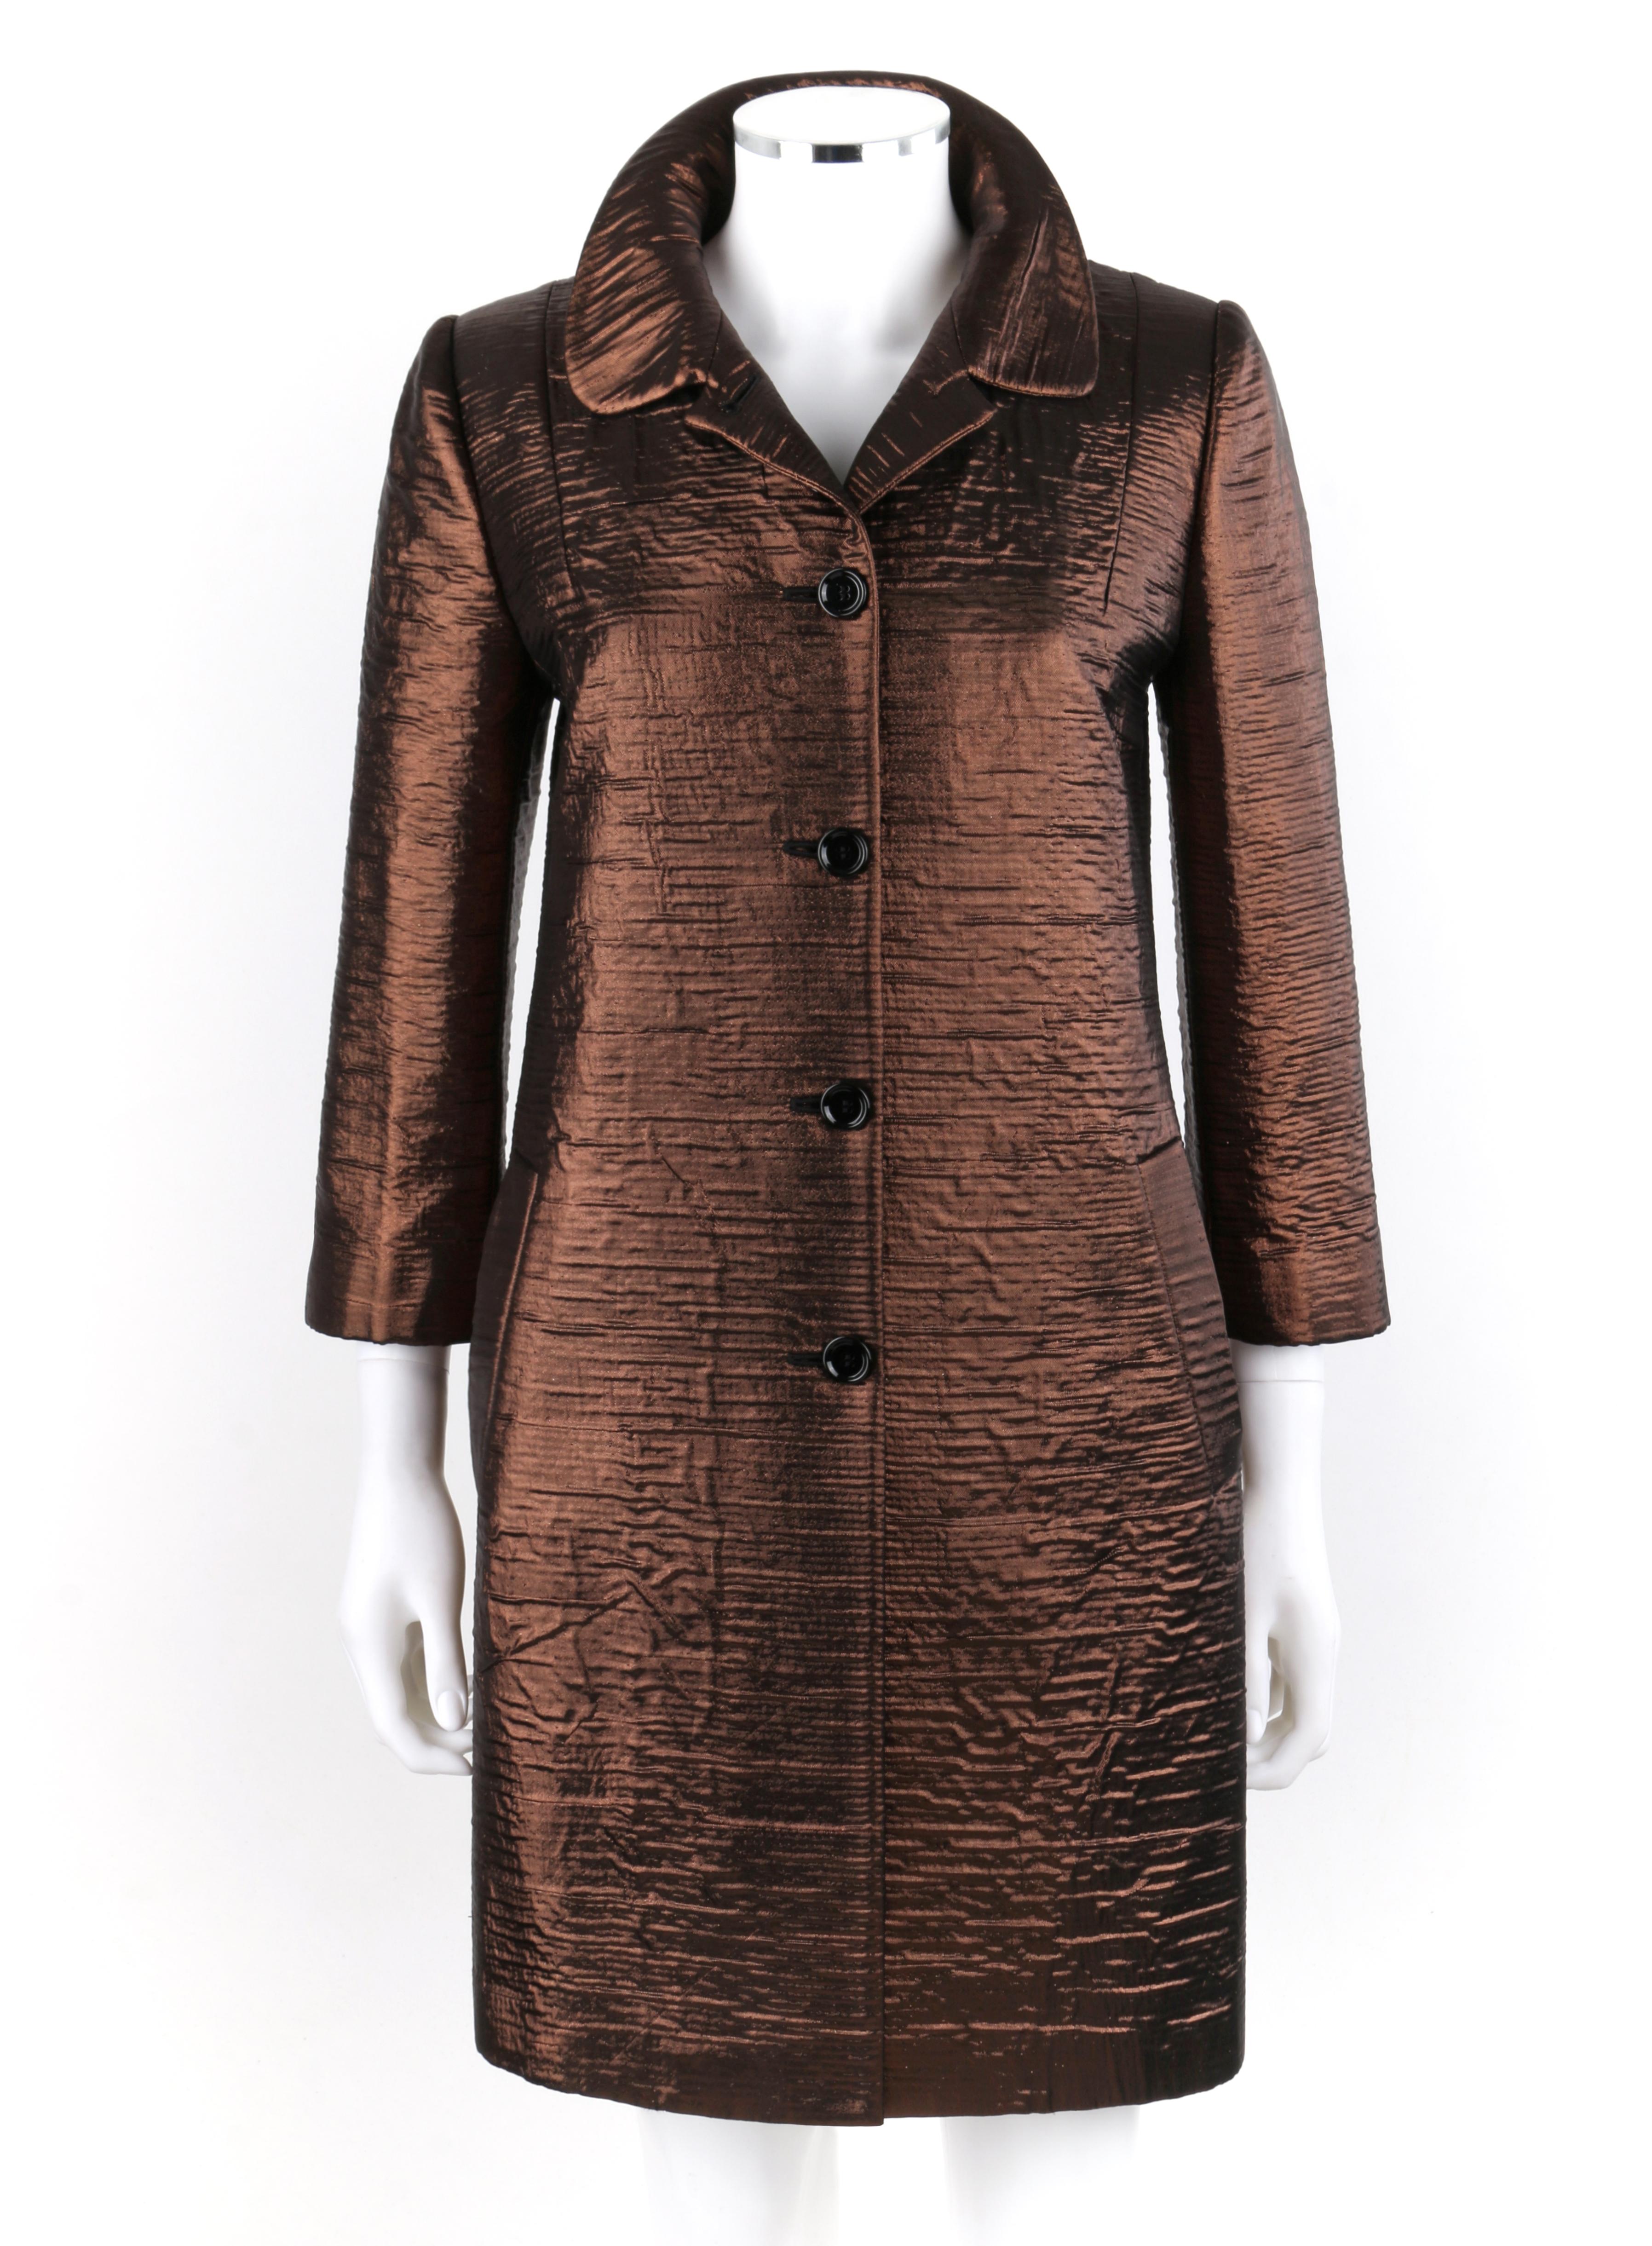 DOLCE & GABBANA c.2010’s Dark Bronze Metallic Silk Car Coat 3/4 Sleeve Jacket 
 
Brand / Manufacturer: Dolce & Gabbana
Style: Car Coat
Color(s): shades of dark bronze, black
Lined: Yes      
Marked Fabric Content: 65% Wool; 19% Silk; 10% Polyester;